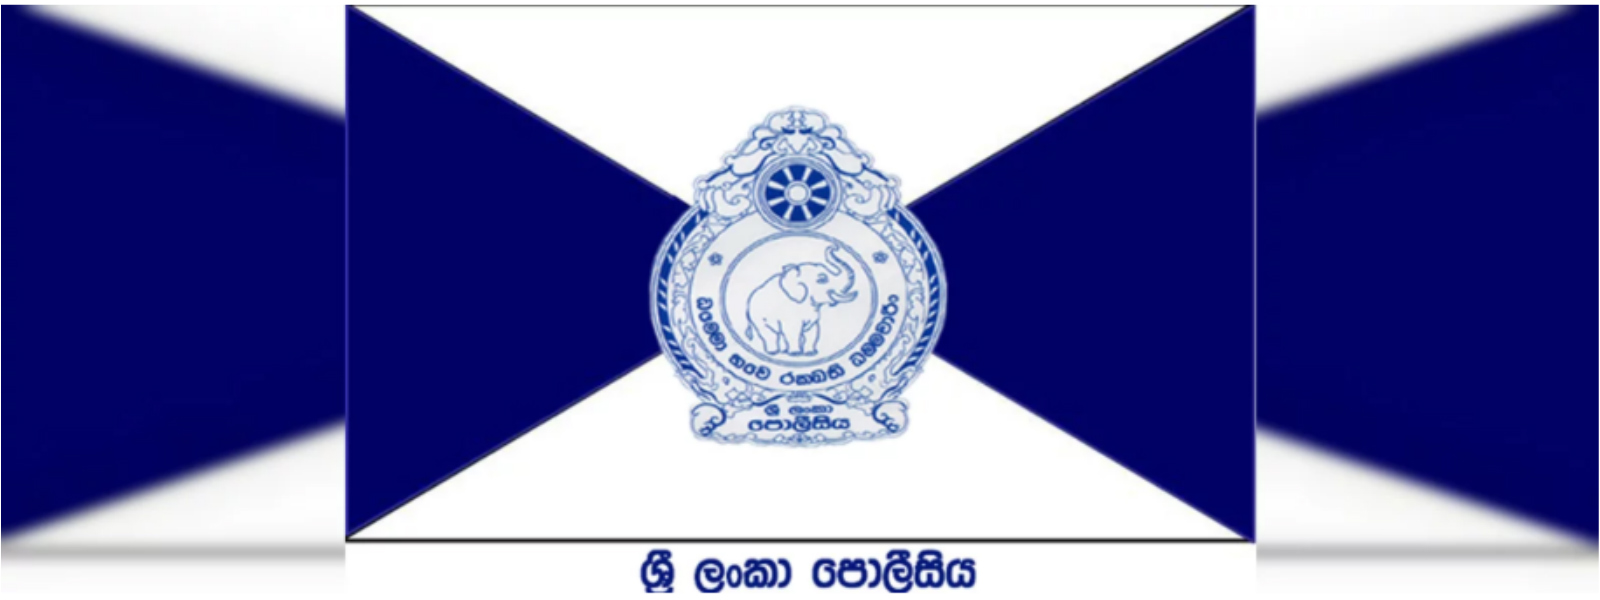 Guidelines issued by Sri Lanka Police for door-to-door sales